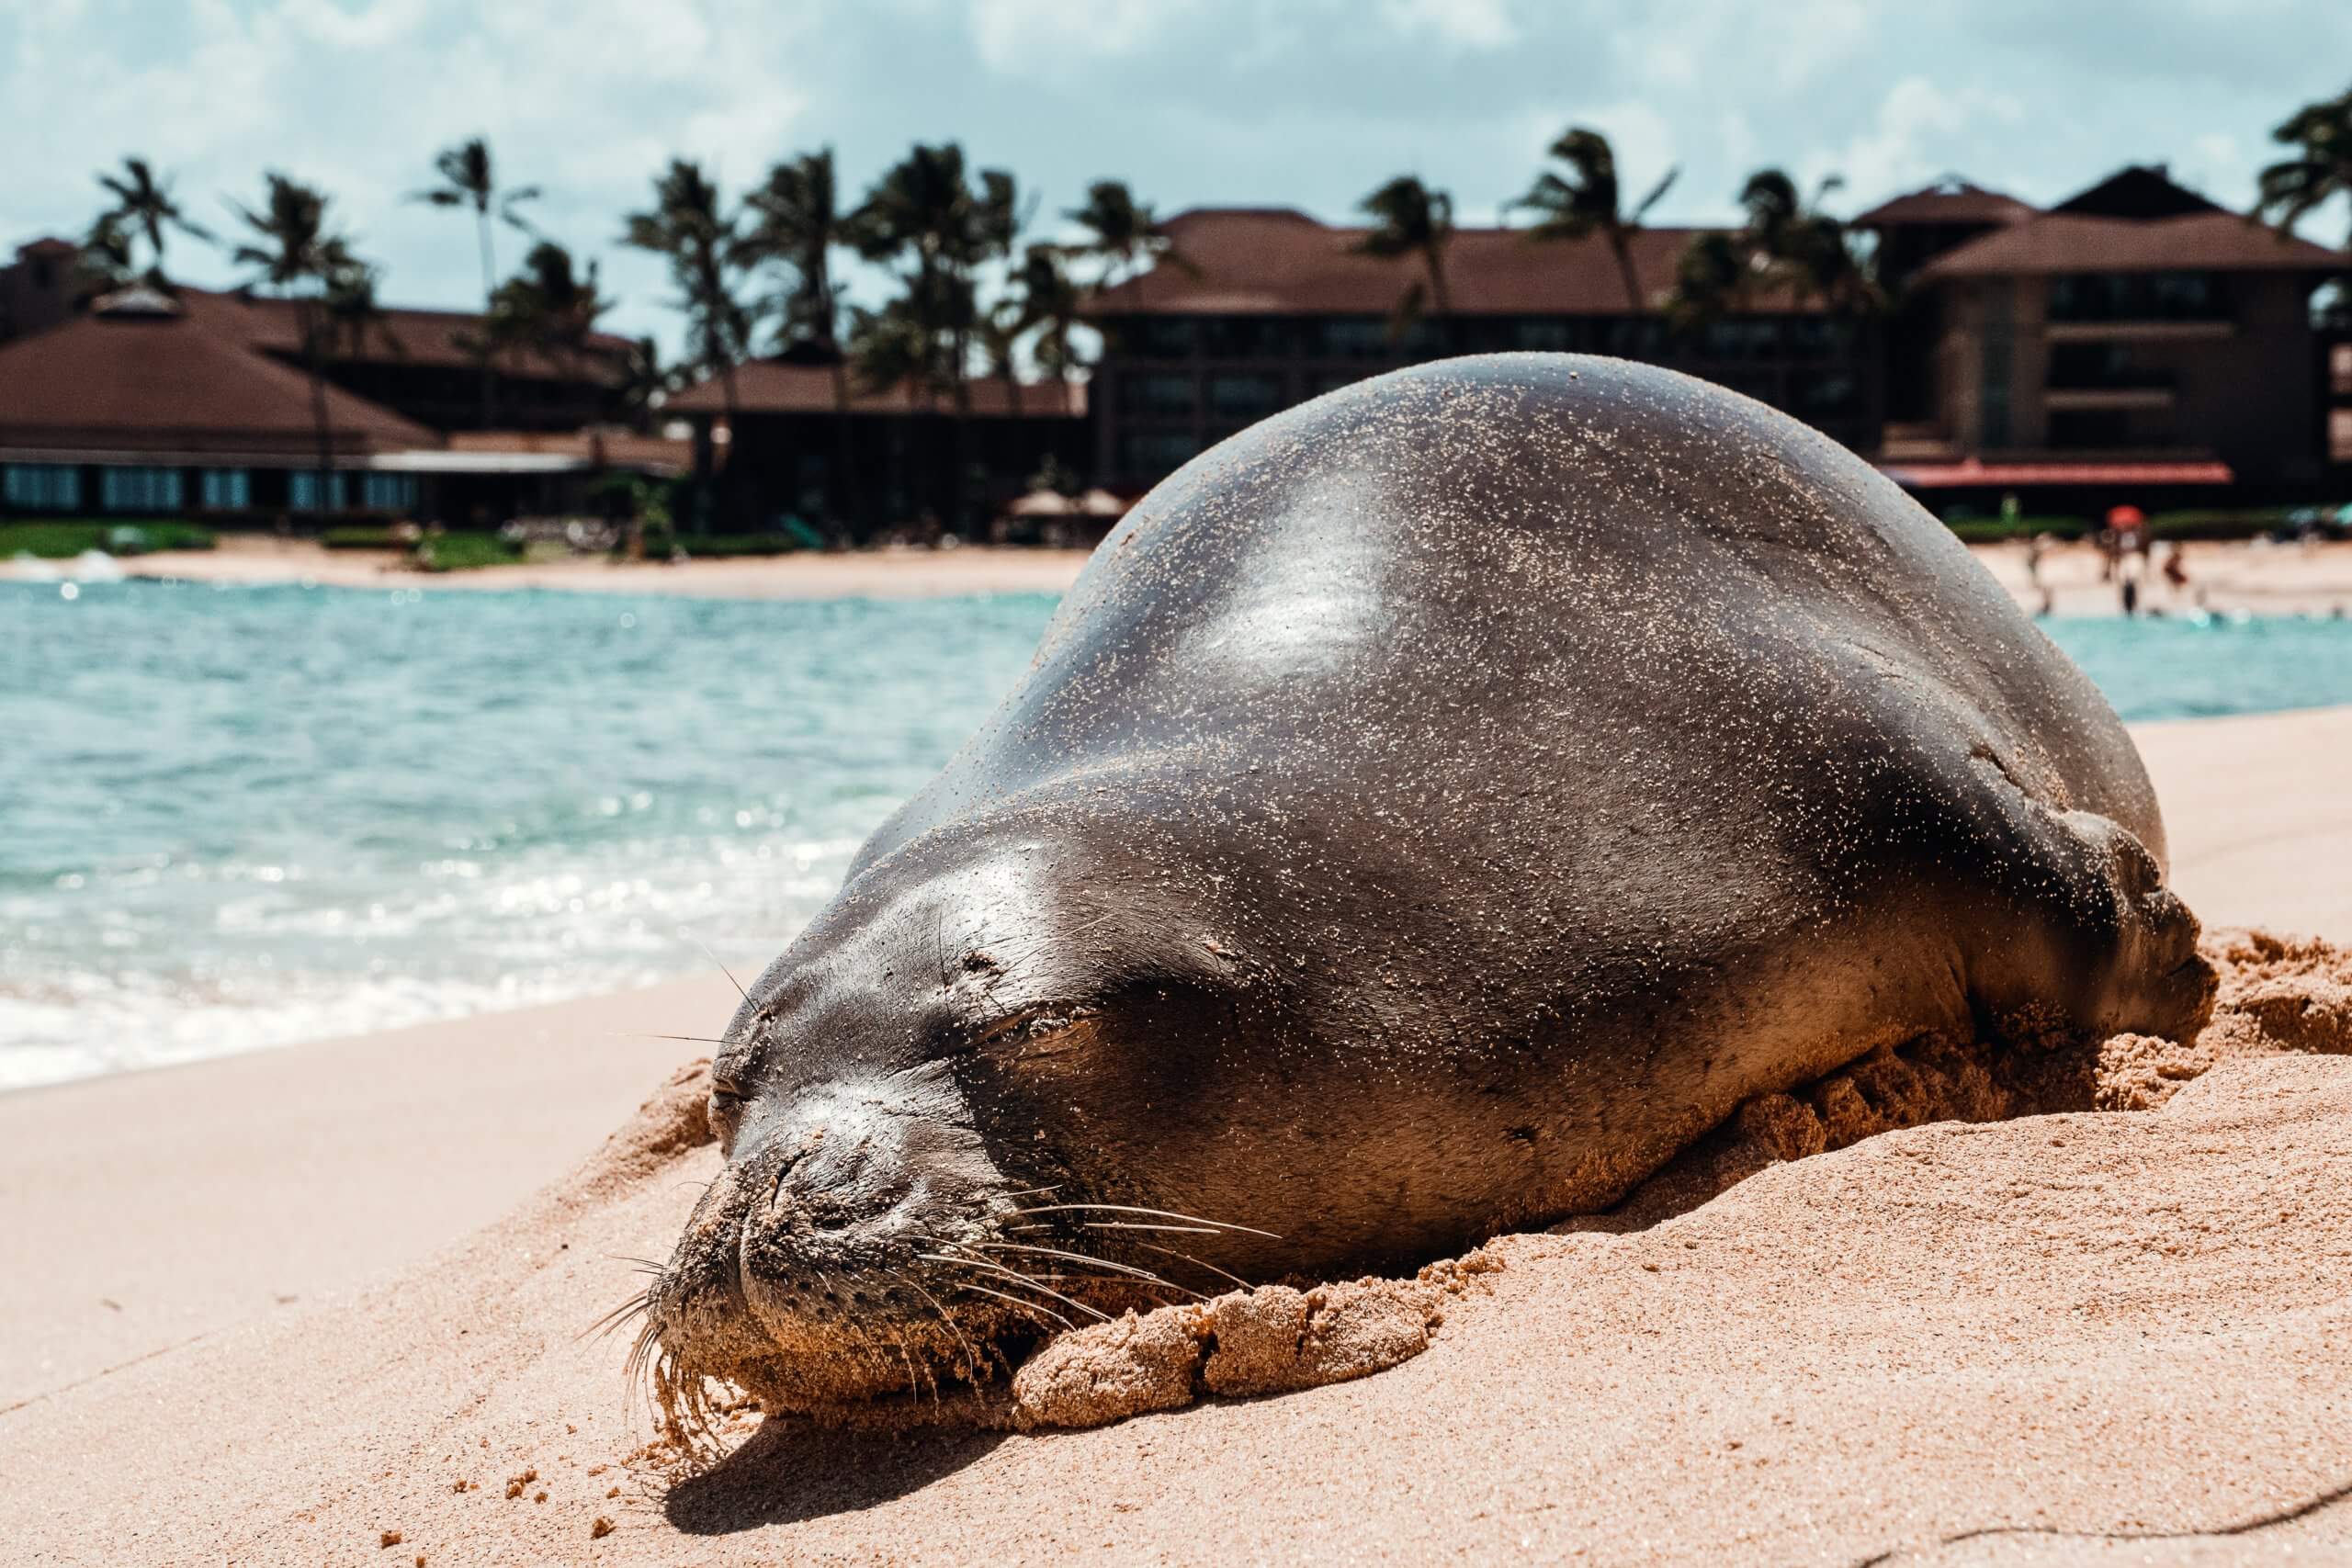 Protecting Kauai’s endangered monk seals